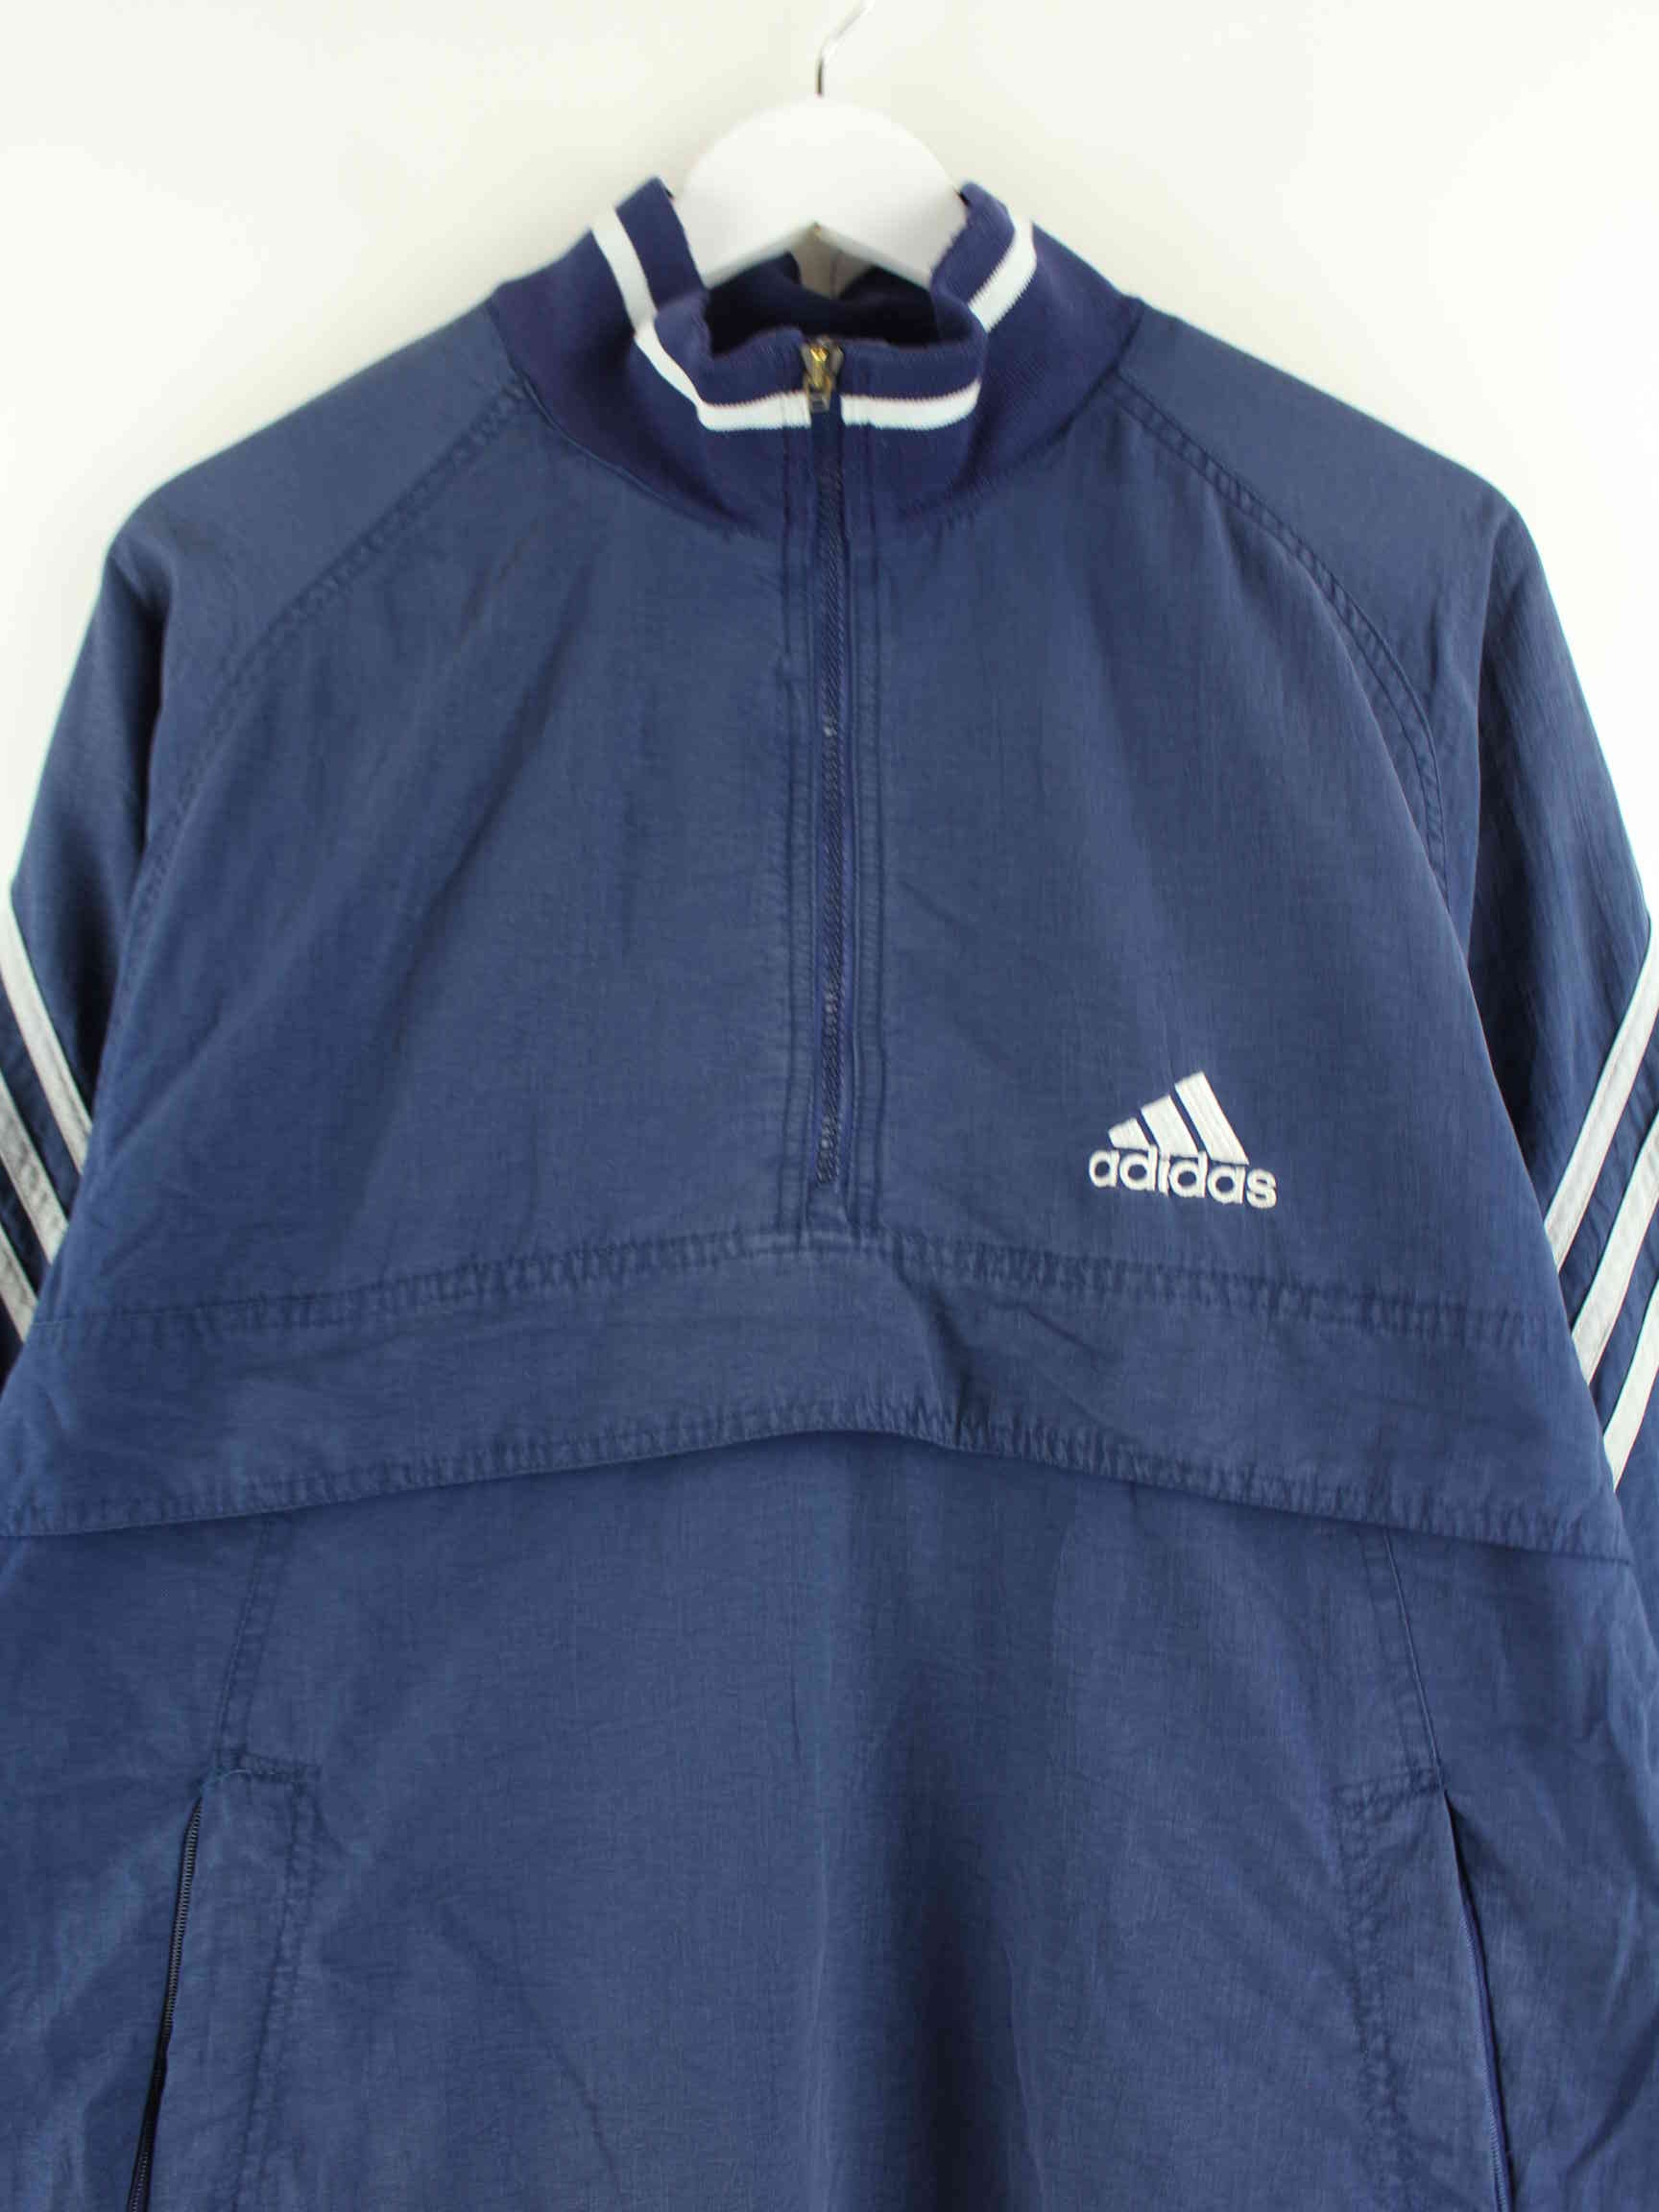 Adidas 90s Vintage 3-Stripes Jacke Blau M (detail image 1)